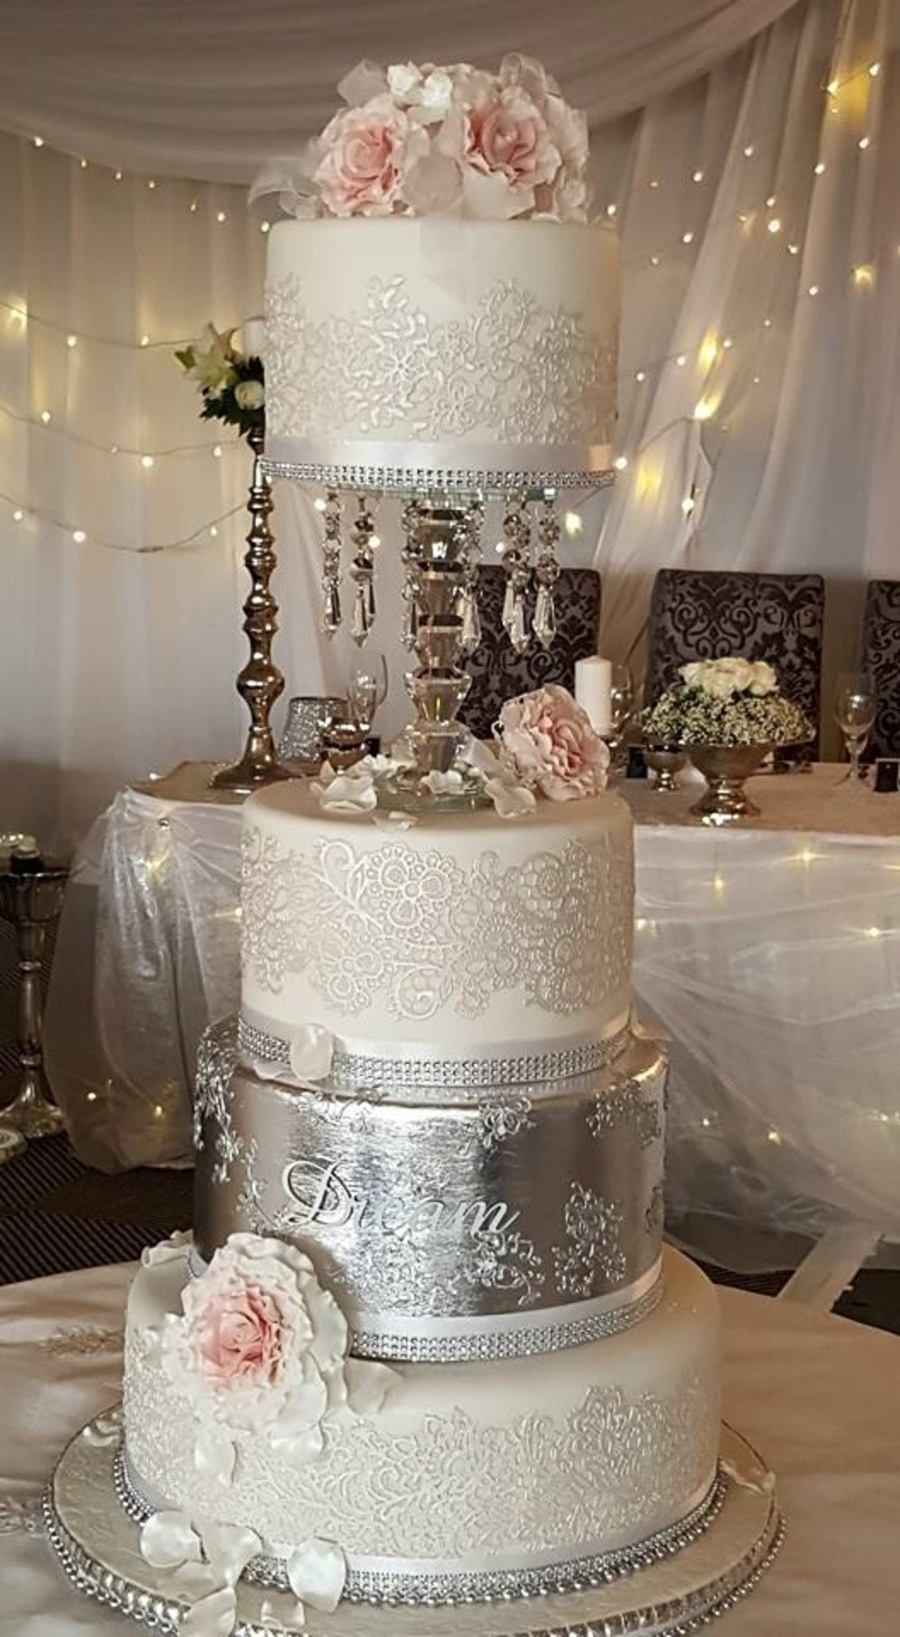 Wedding Cakes Images 2015
 Wedding Cake Silver Dreams 2015 Cornelia Marreiros